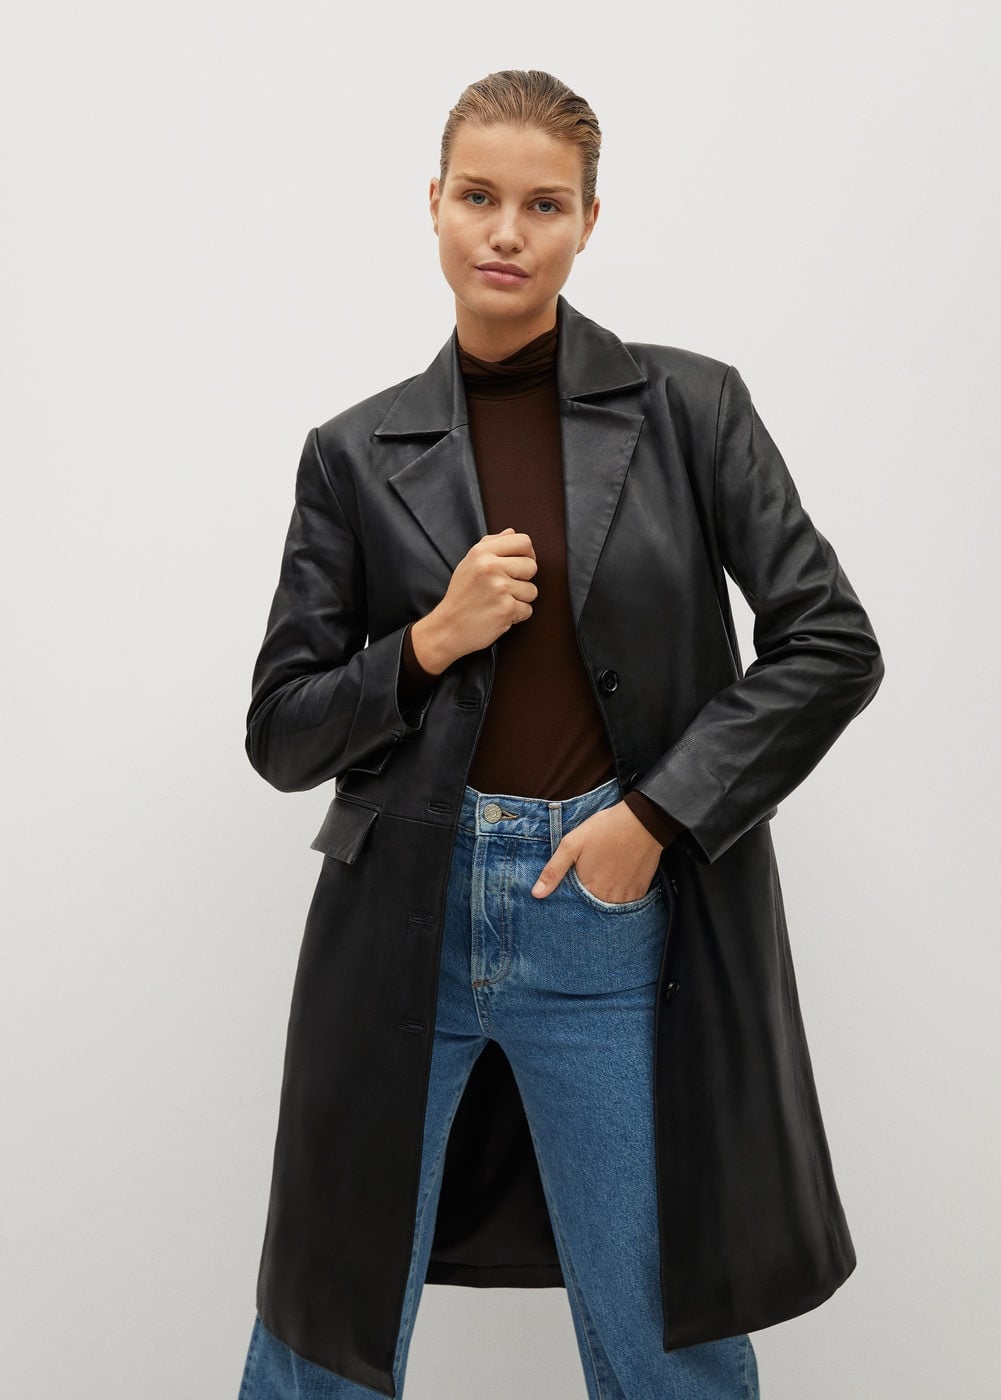 Selena Gomez Went Shopping in an Louis Vuitton Trench Coat